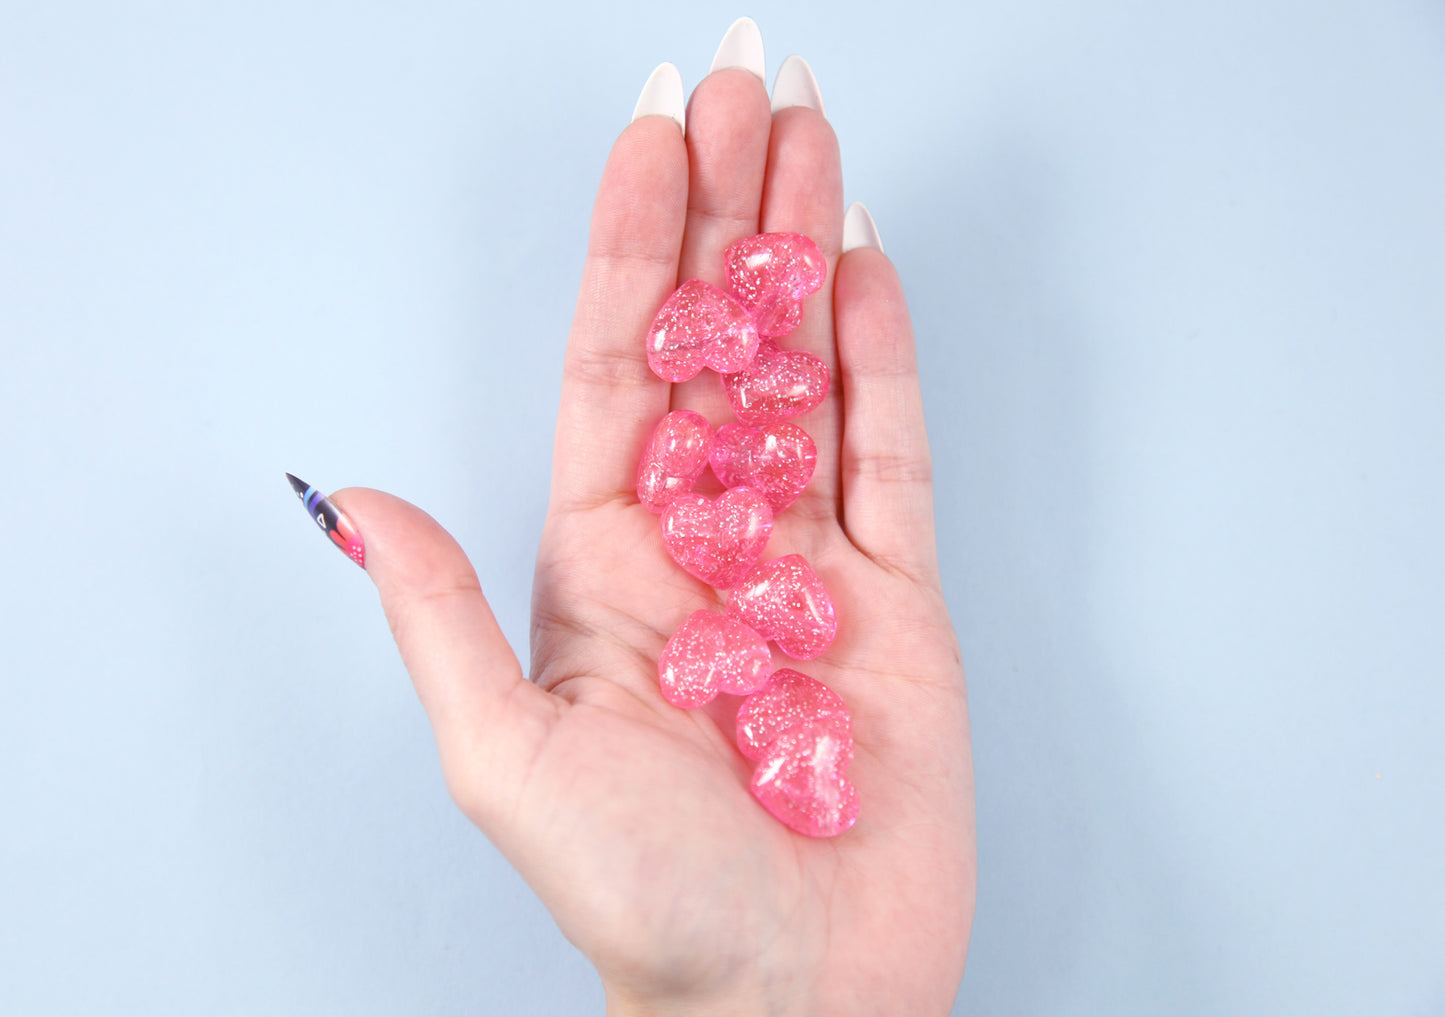 Pink Heart Beads - 18mm Pink Glitter Puffy Heart Acrylic or Resin Beads - 25 pcs set